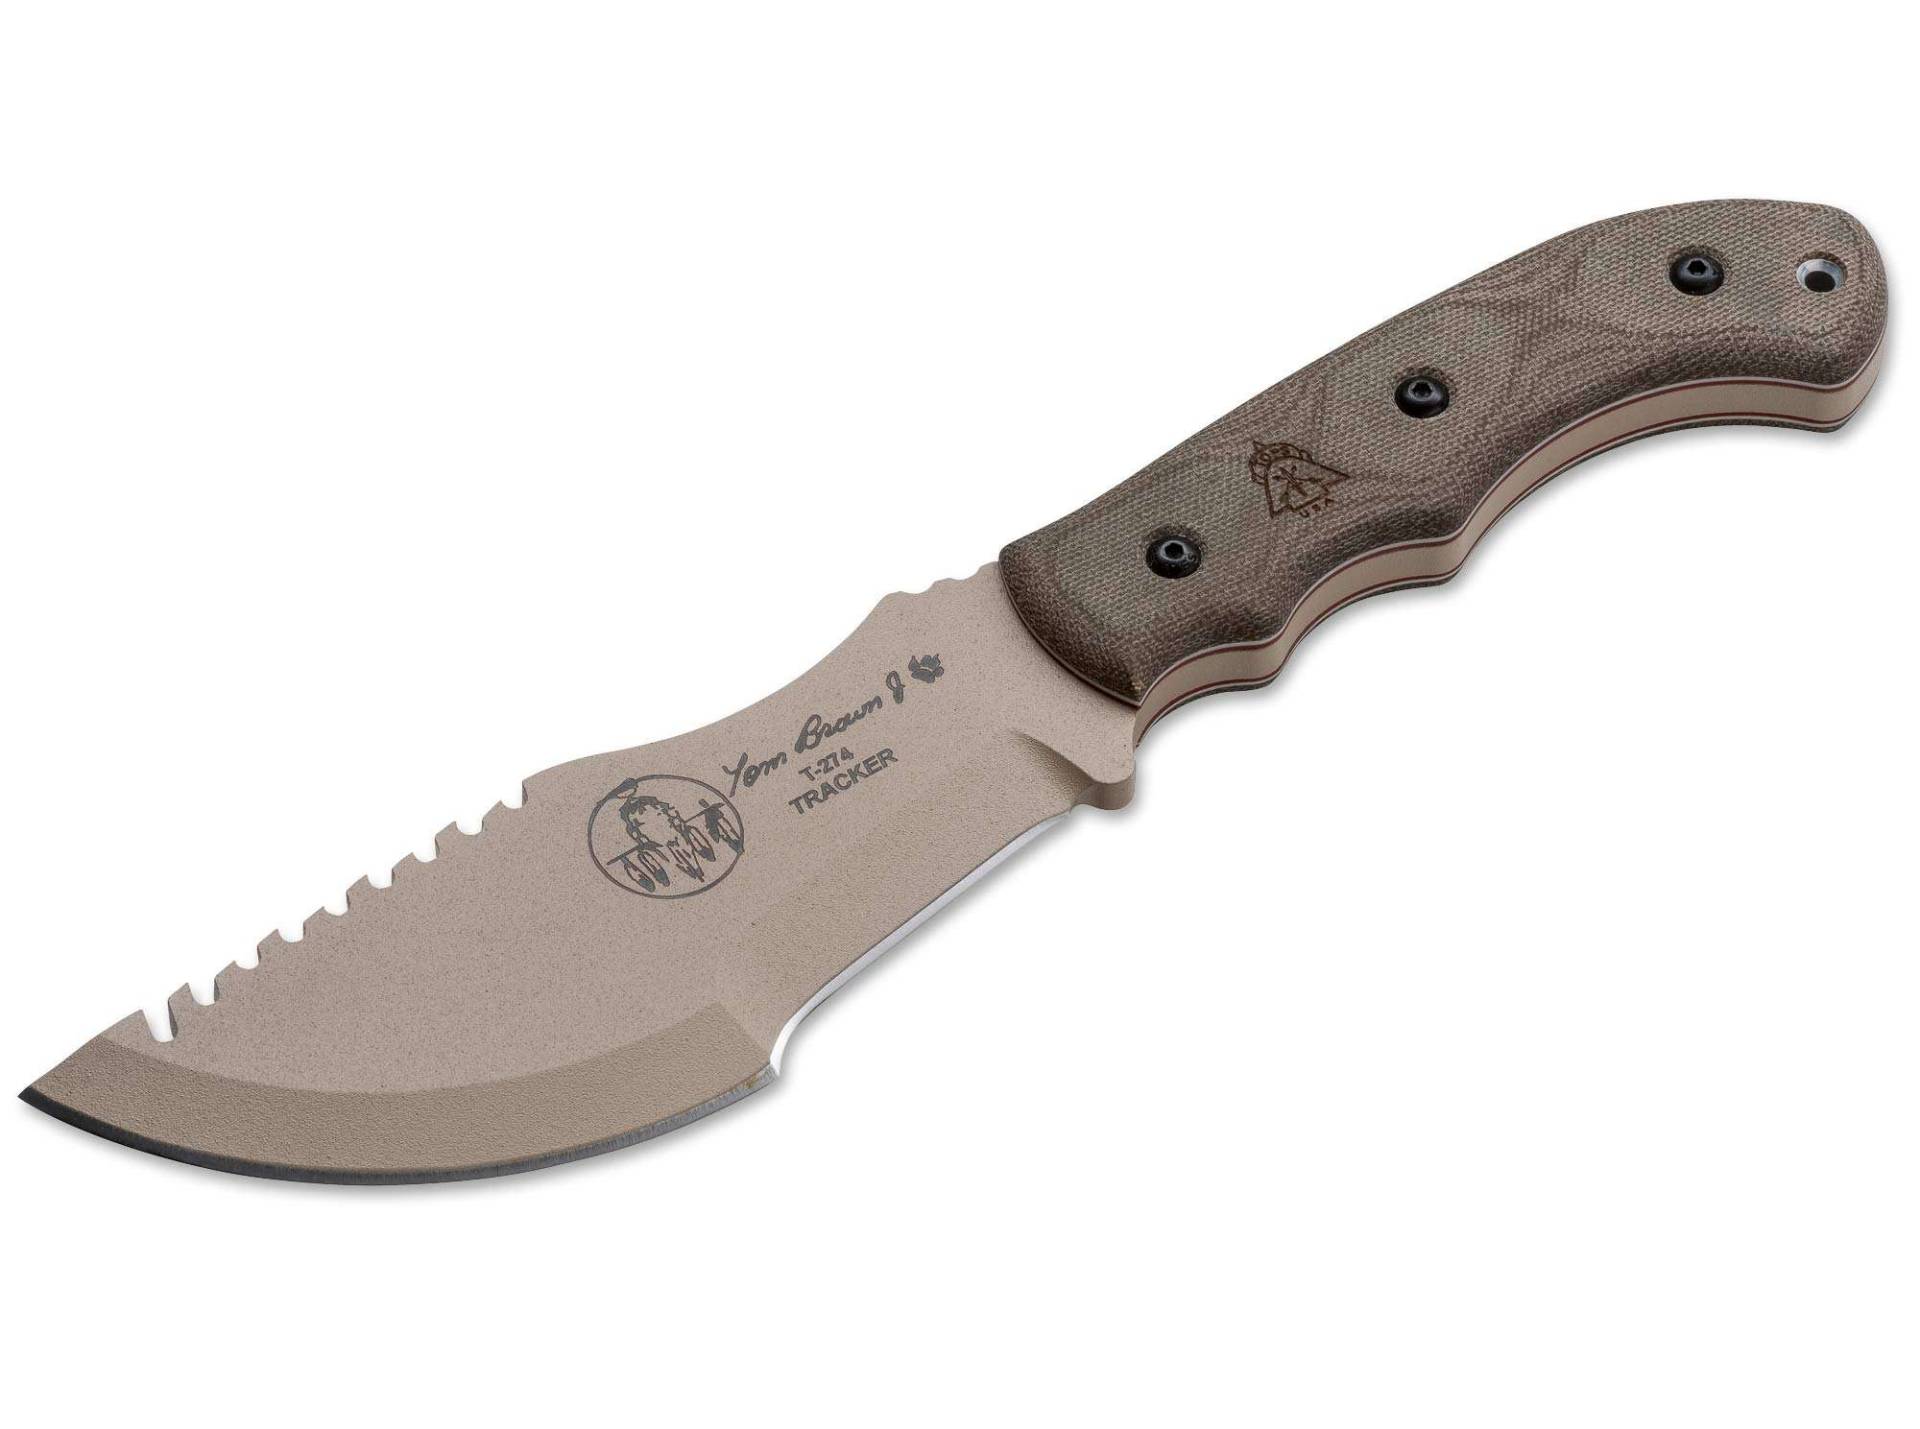 Tom Brown Tracker Tan Outdoor Messer von Tops Knives